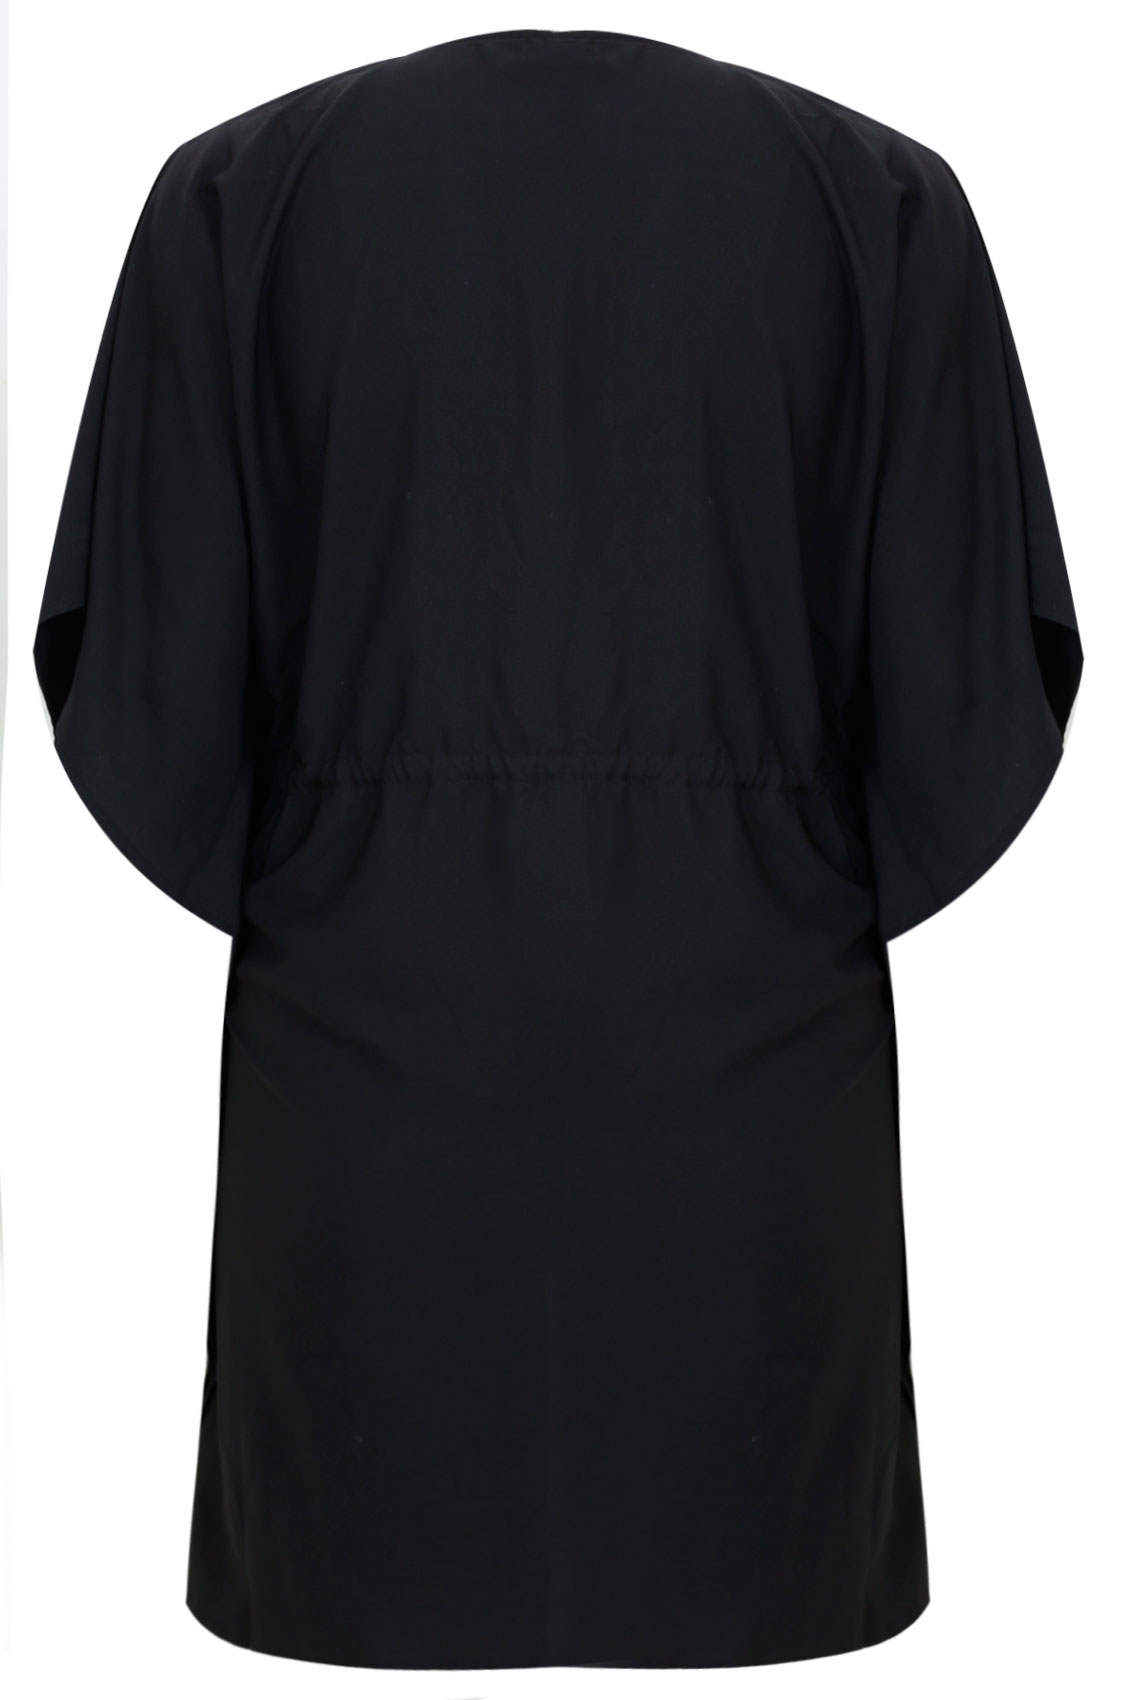 Black Short Sleeved Kimono With Silver Stud Detail Plus Size M,L,XL